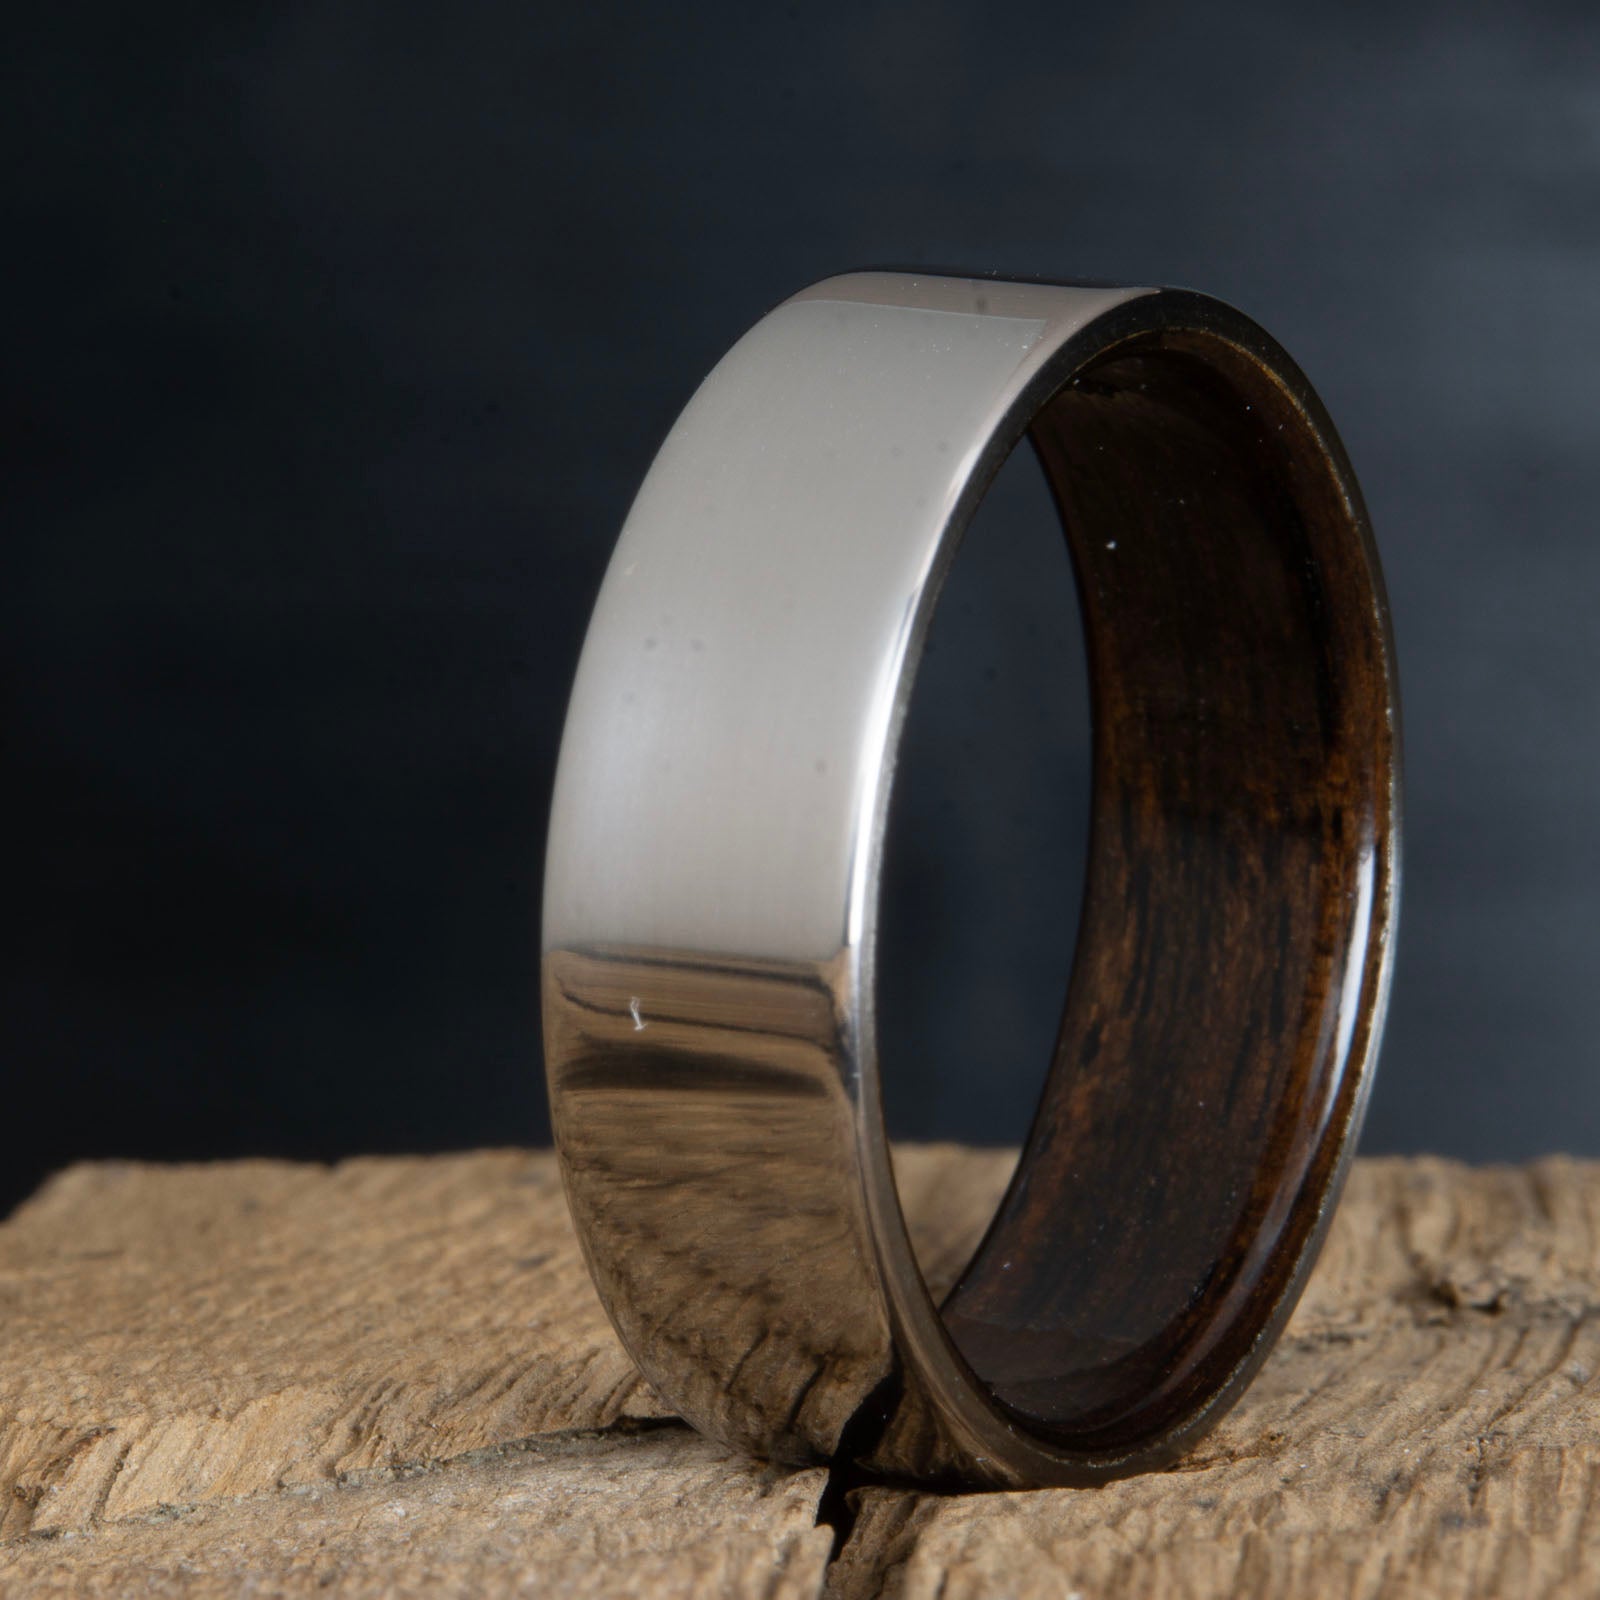 Ebony wooden ring with titanium